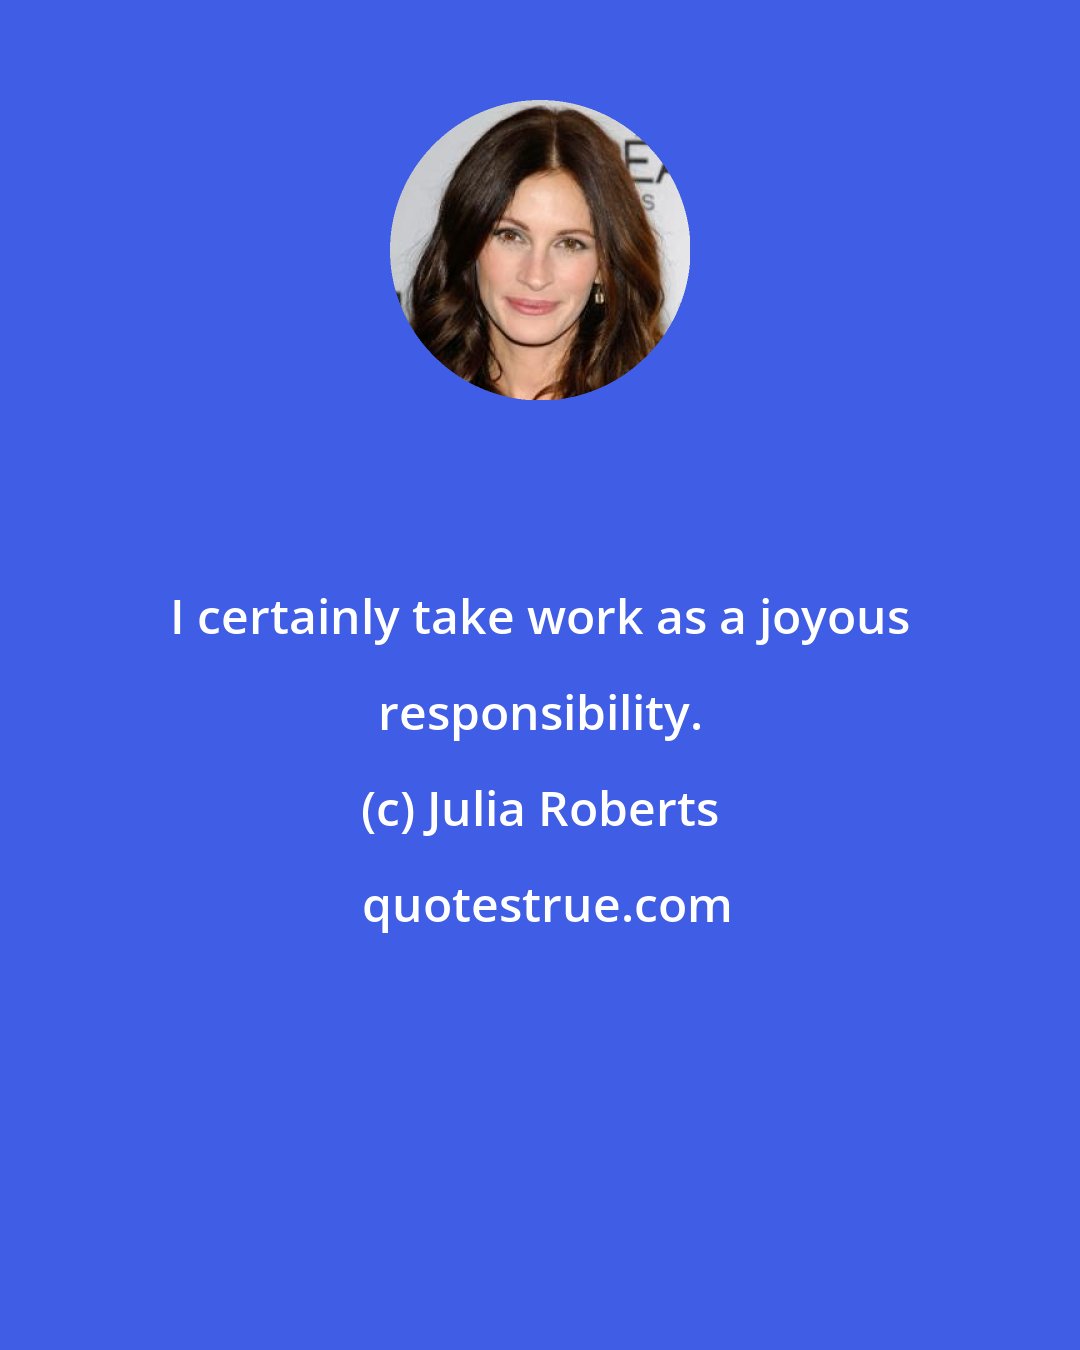 Julia Roberts: I certainly take work as a joyous responsibility.